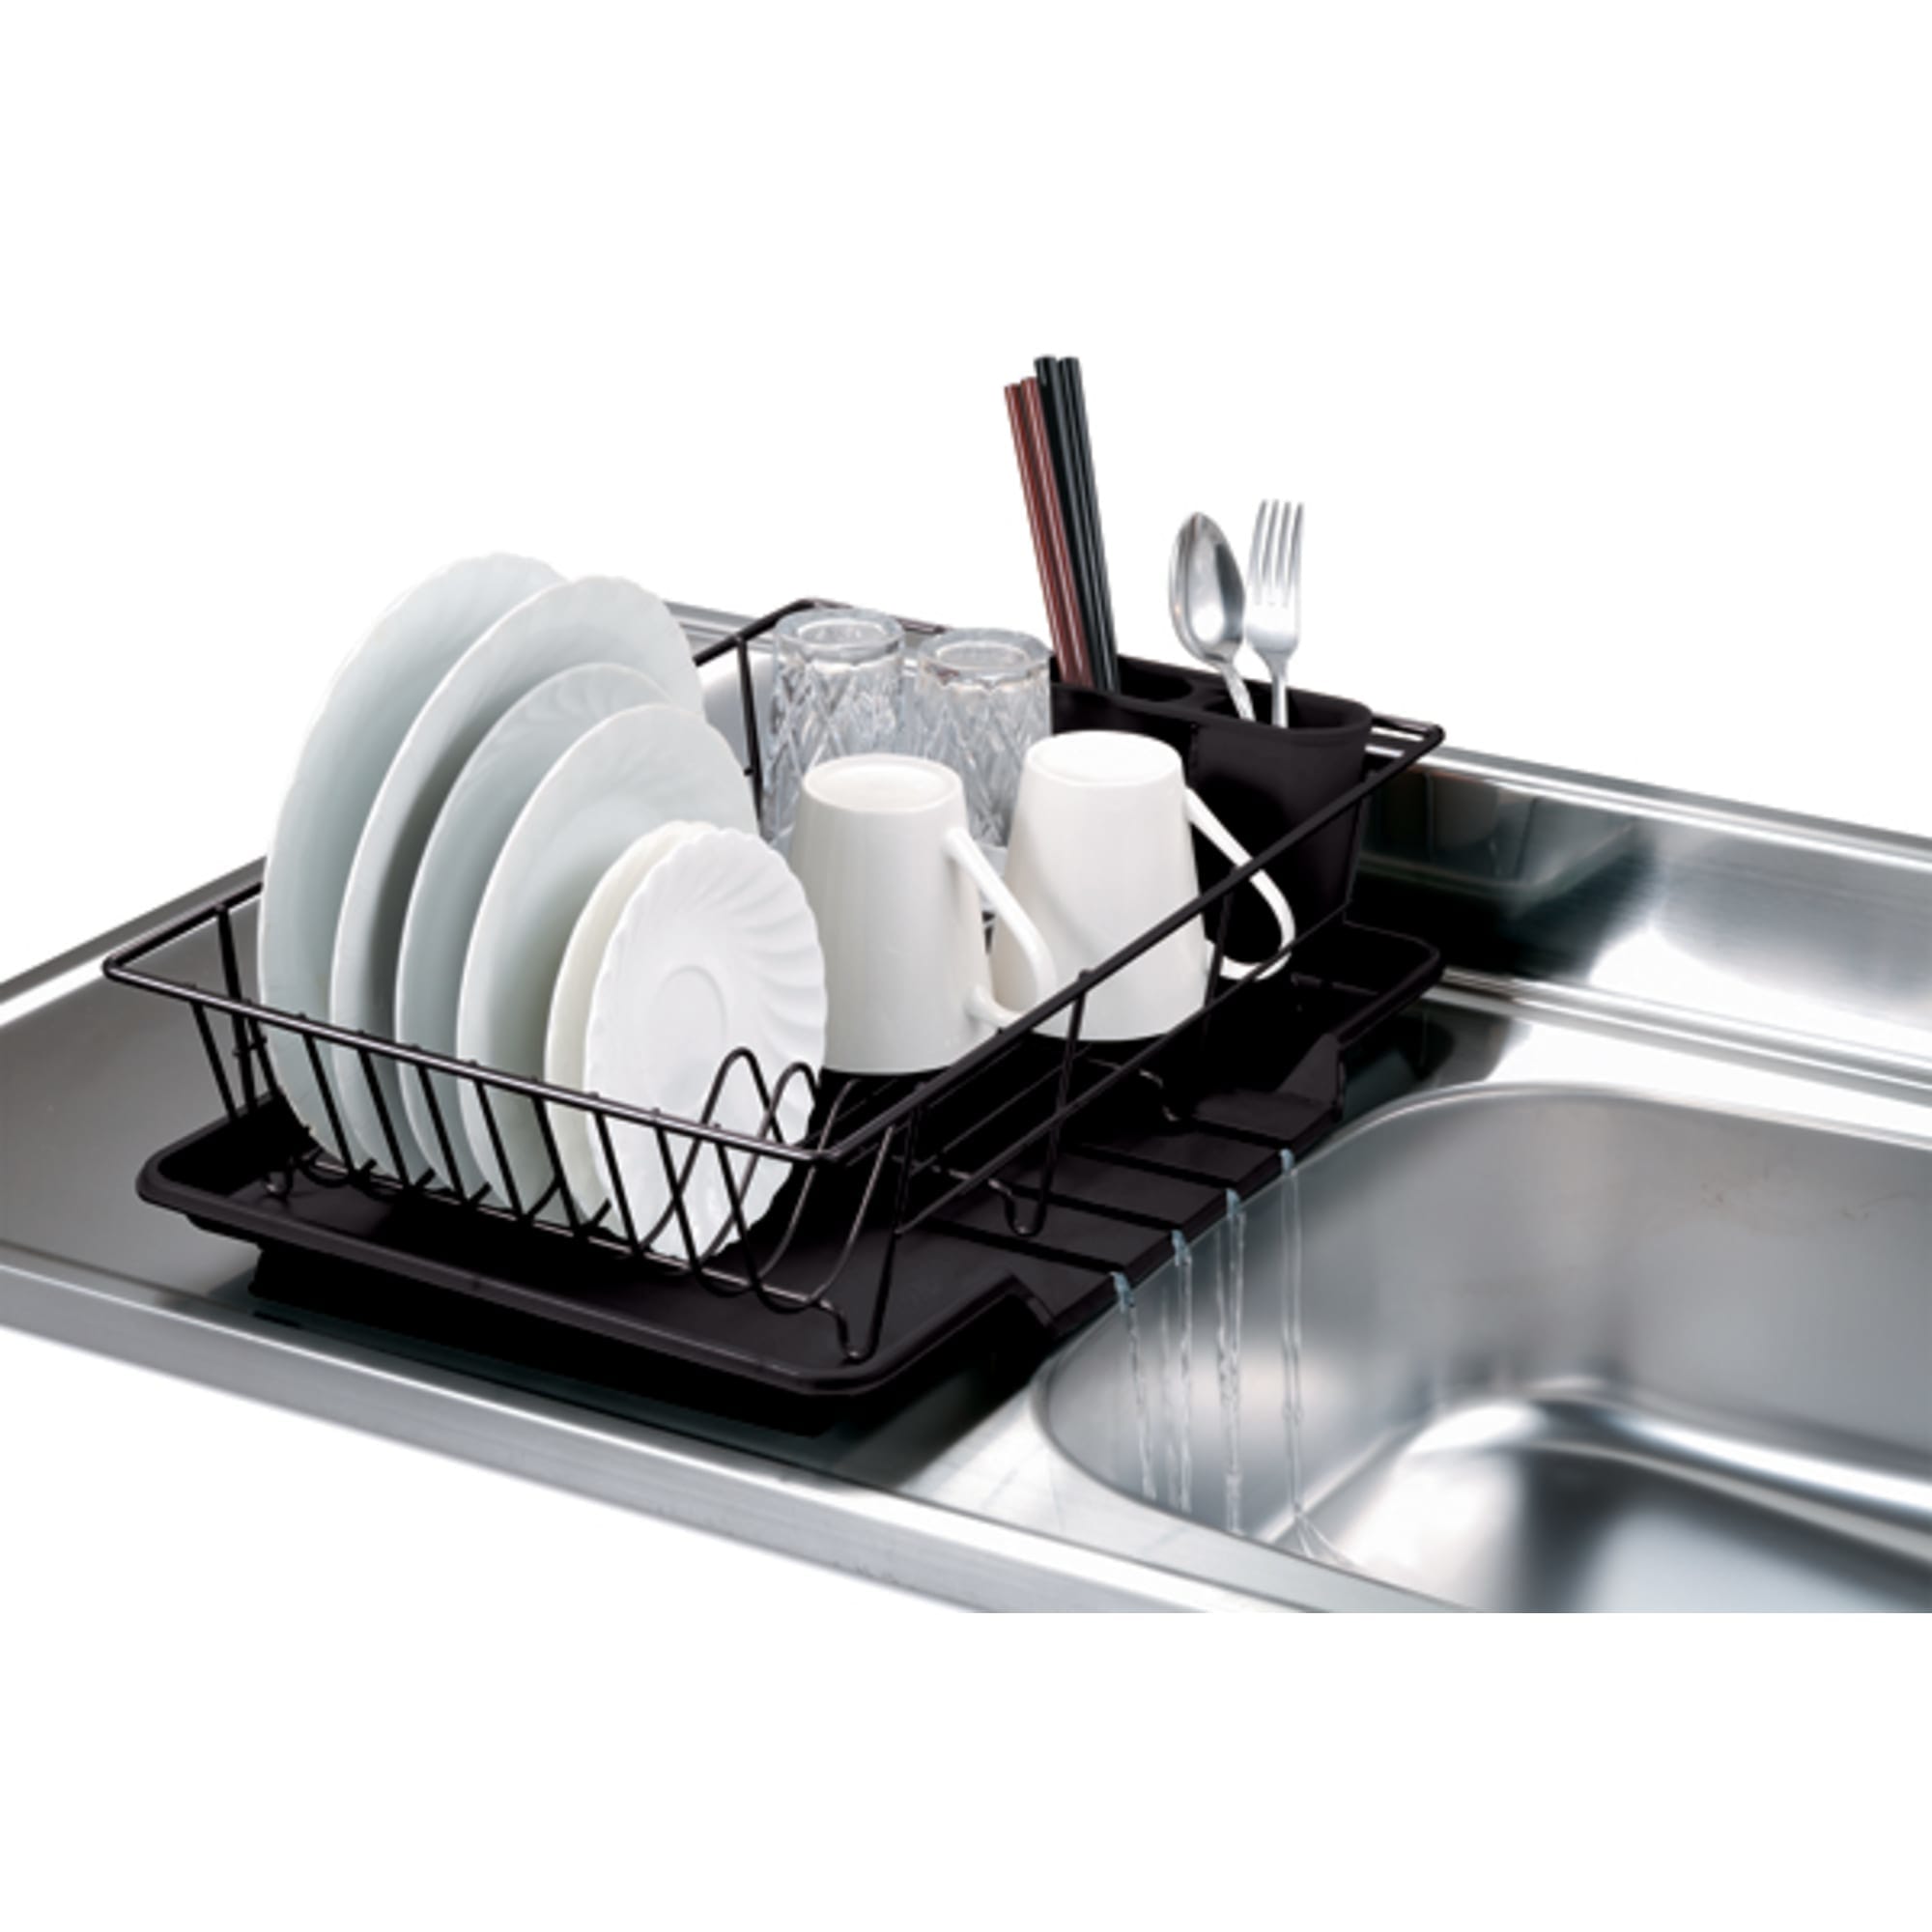 12 Pieces Home Basics Compact Dish Drainer - Dish Drying Racks